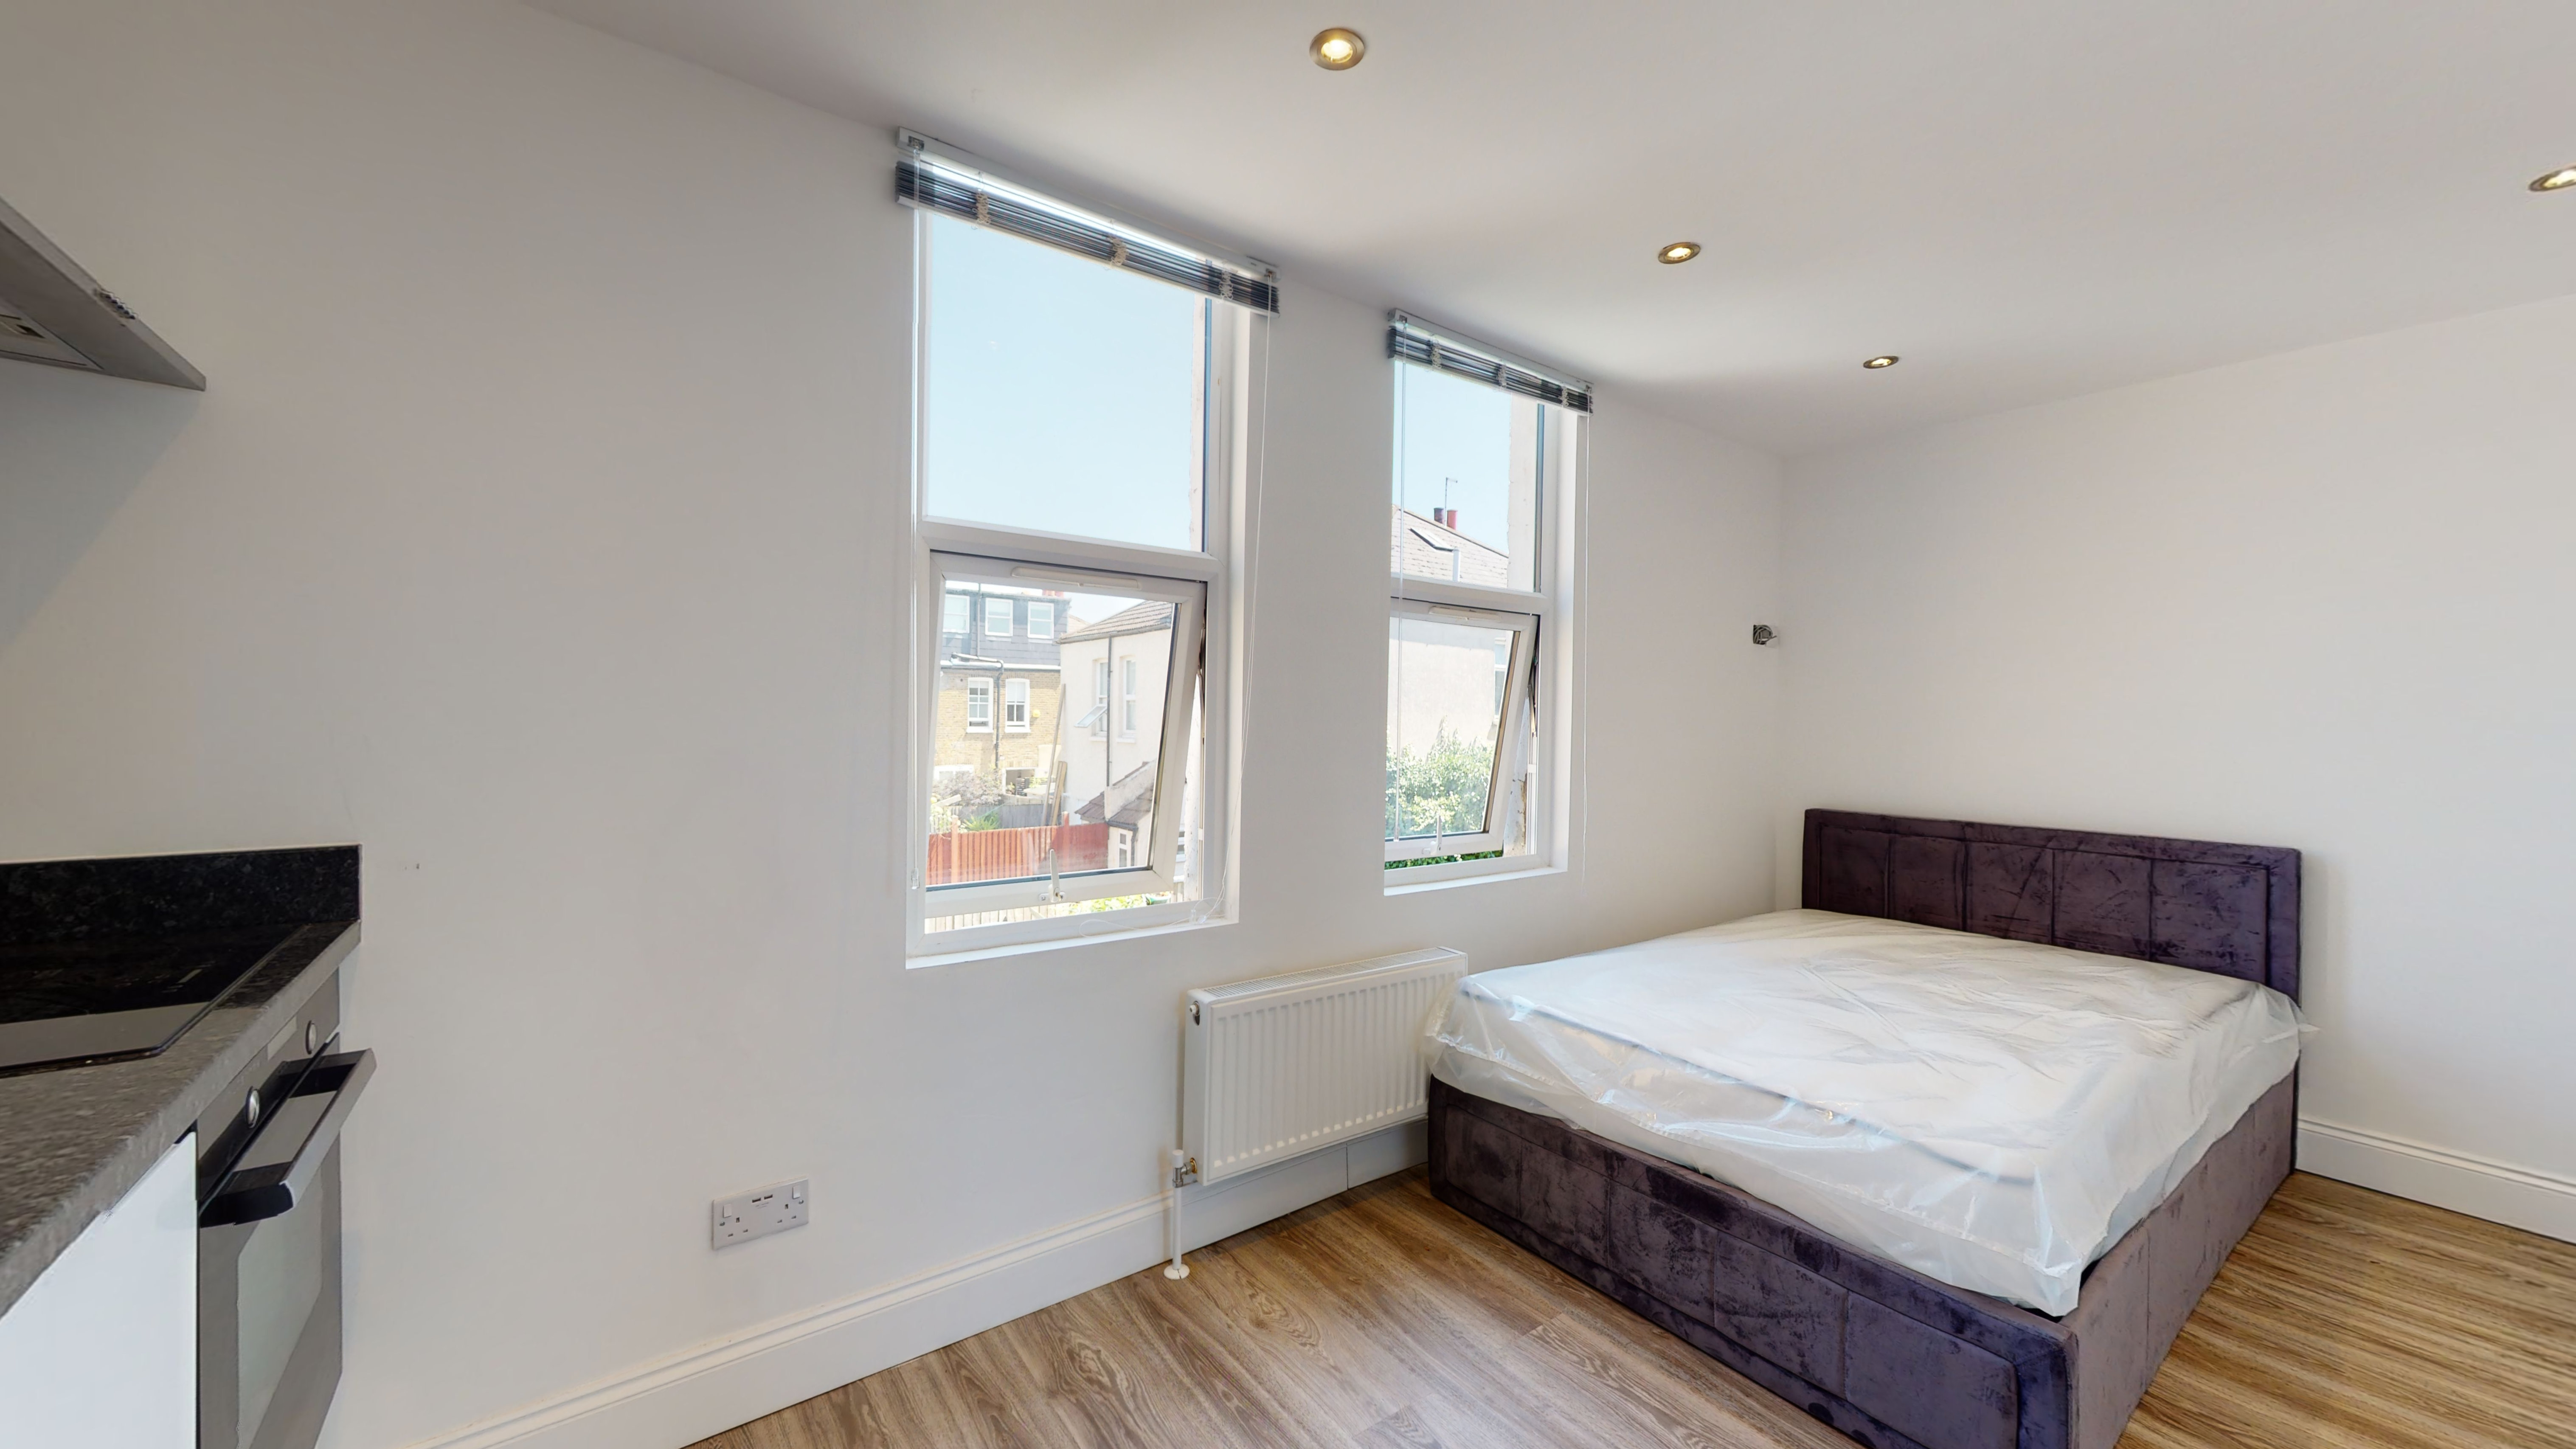 0 bed Apartment/Flat/Studio for rent in Merton. From PropertyLoop